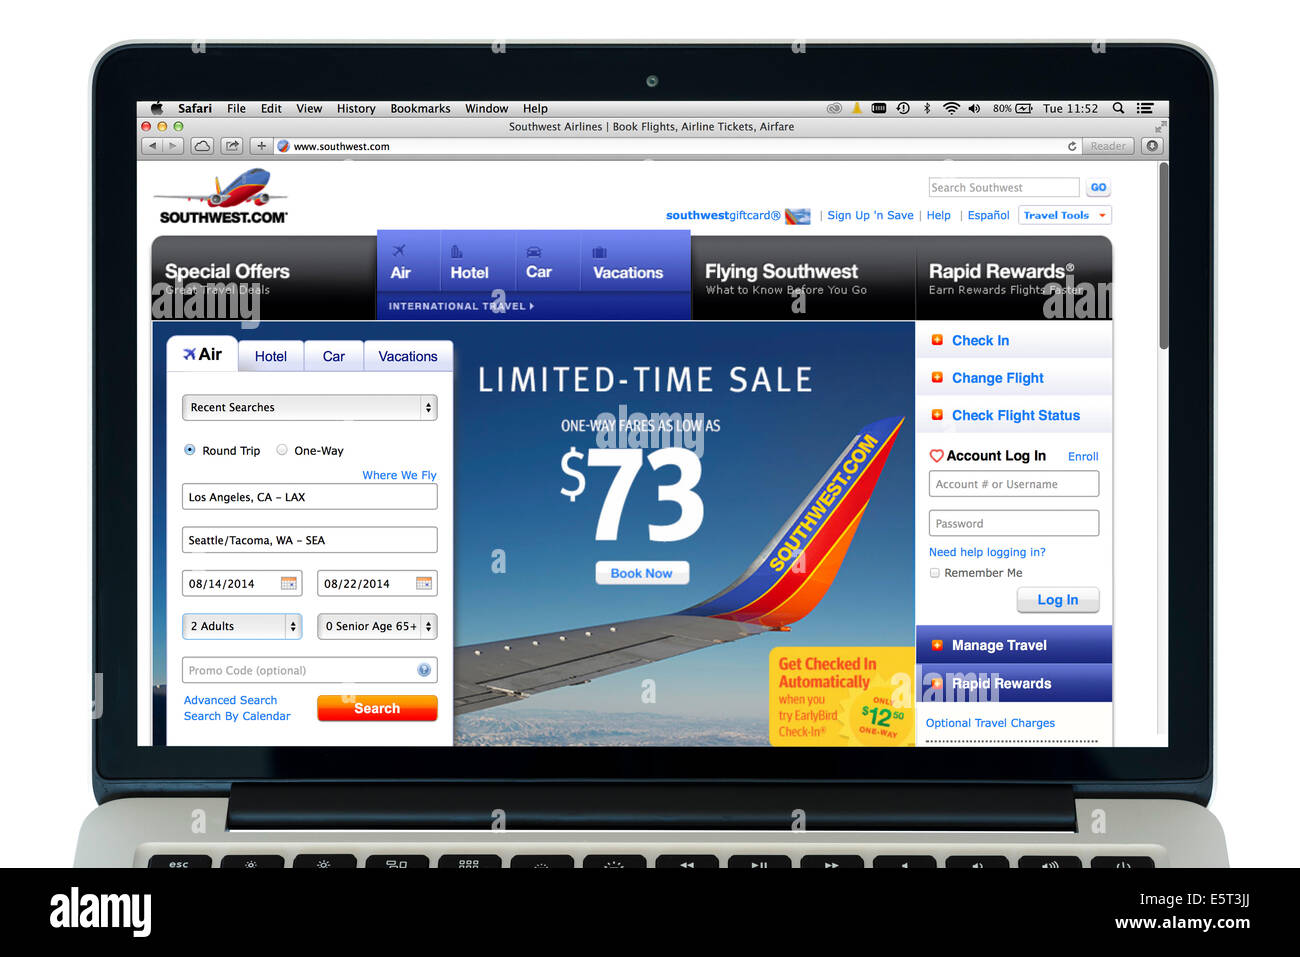 Southwest Airlines Flugbuchung auf einem 13' Apple MacBook Pro Computer, USA Stockfoto